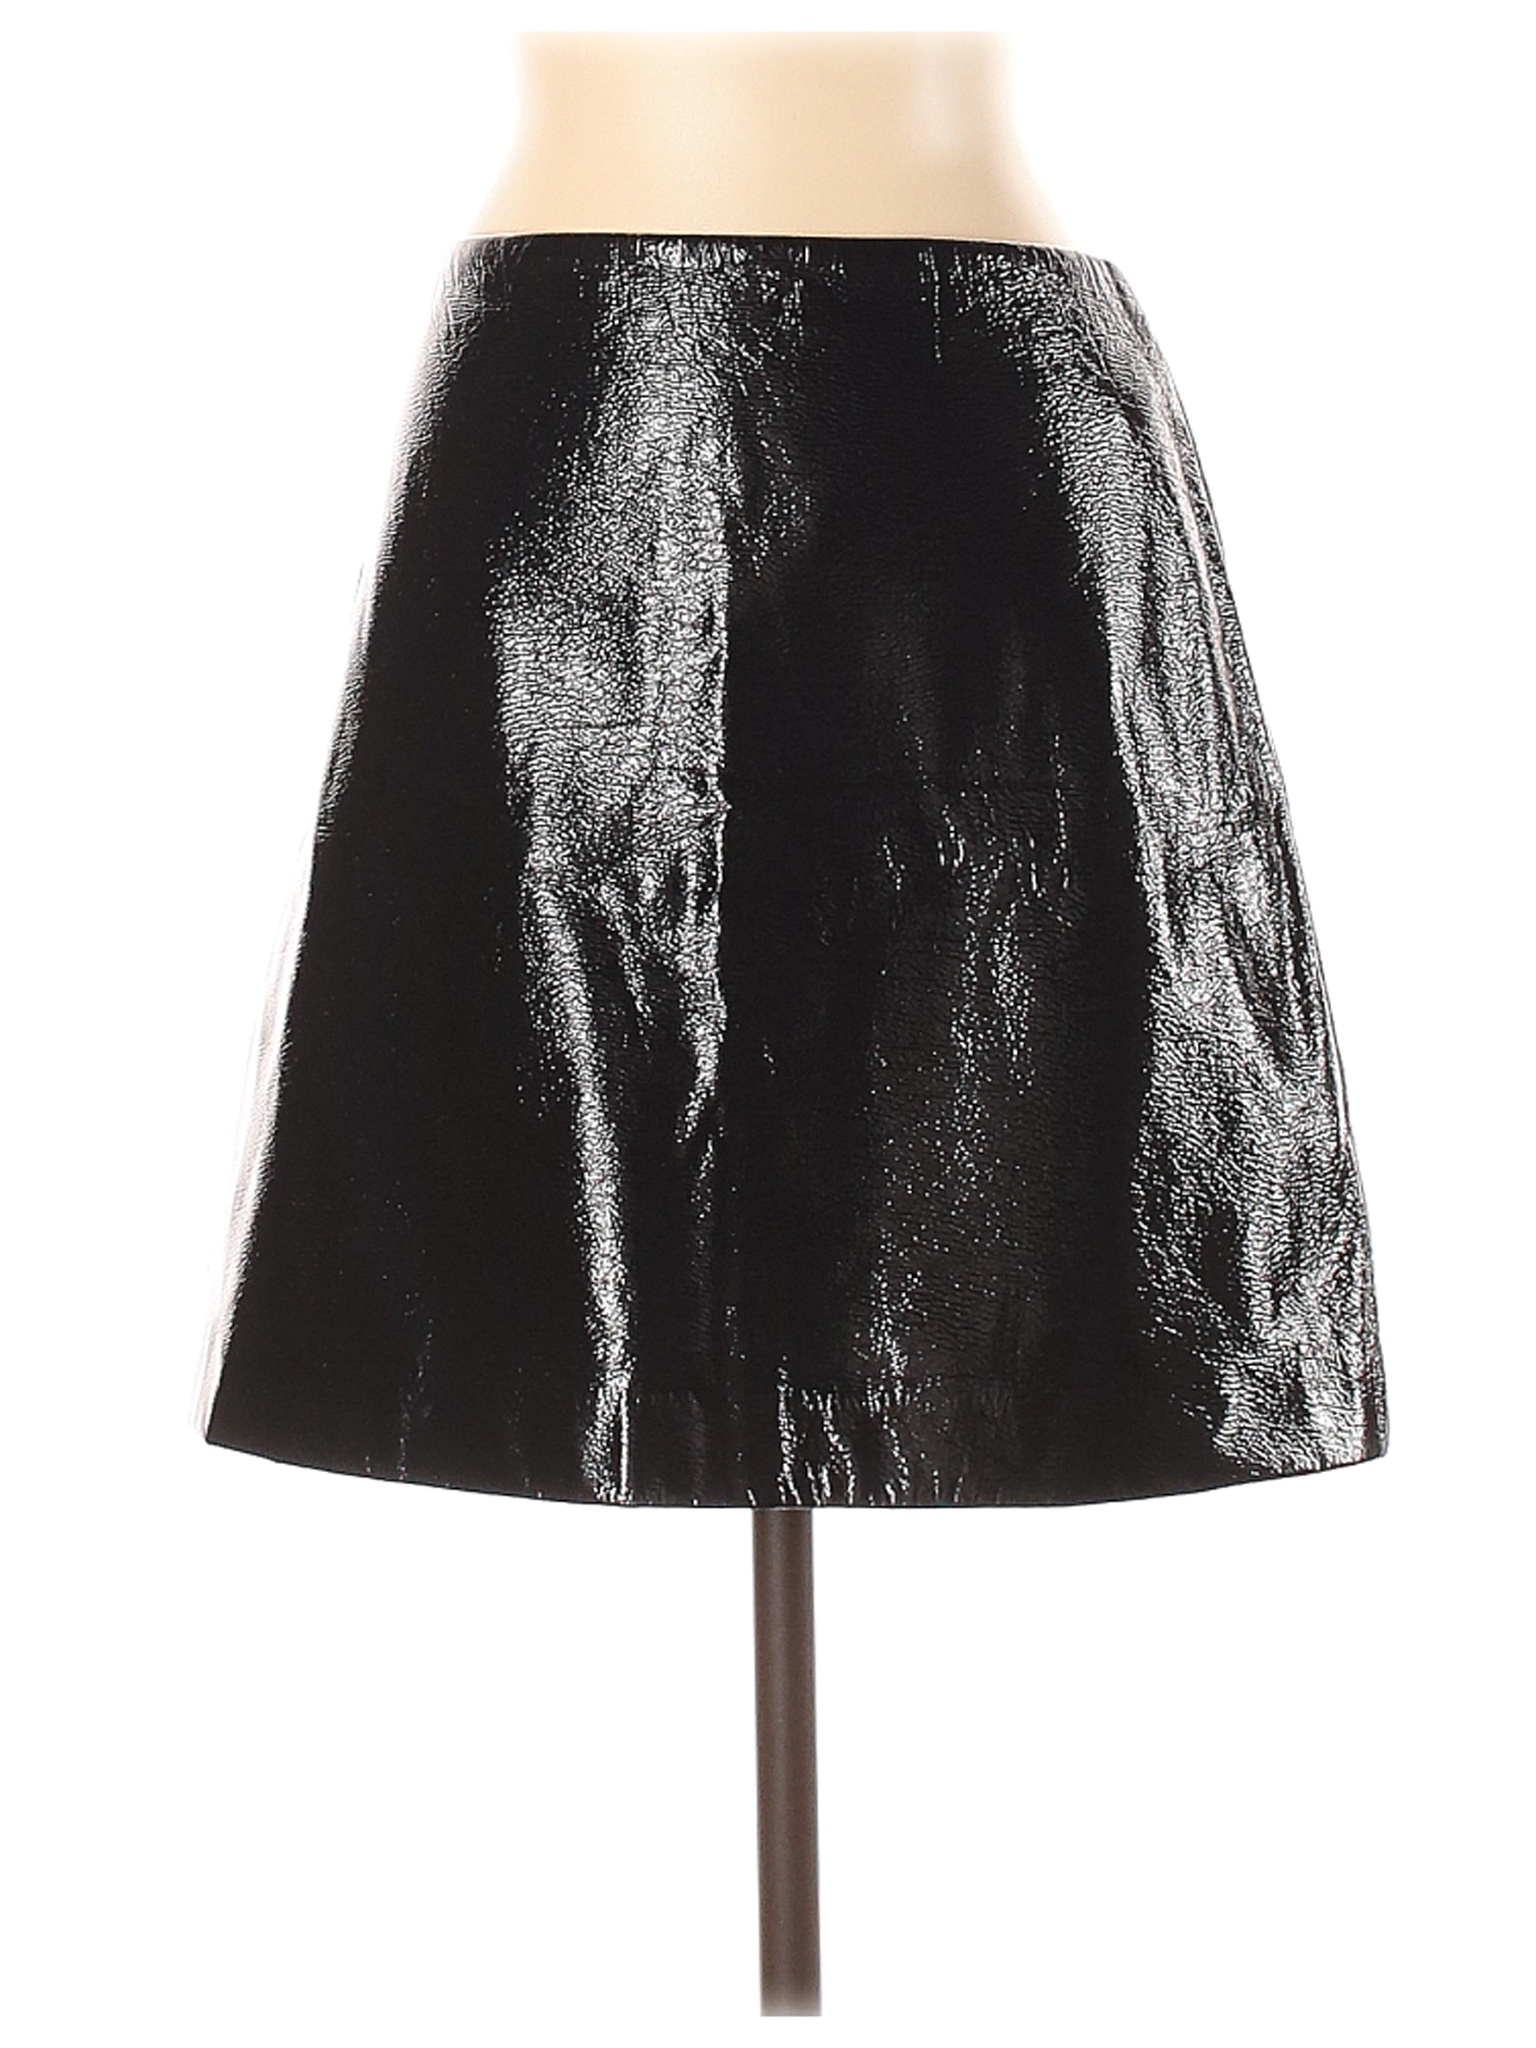 Express Women Black Faux Leather Skirt 4 | eBay